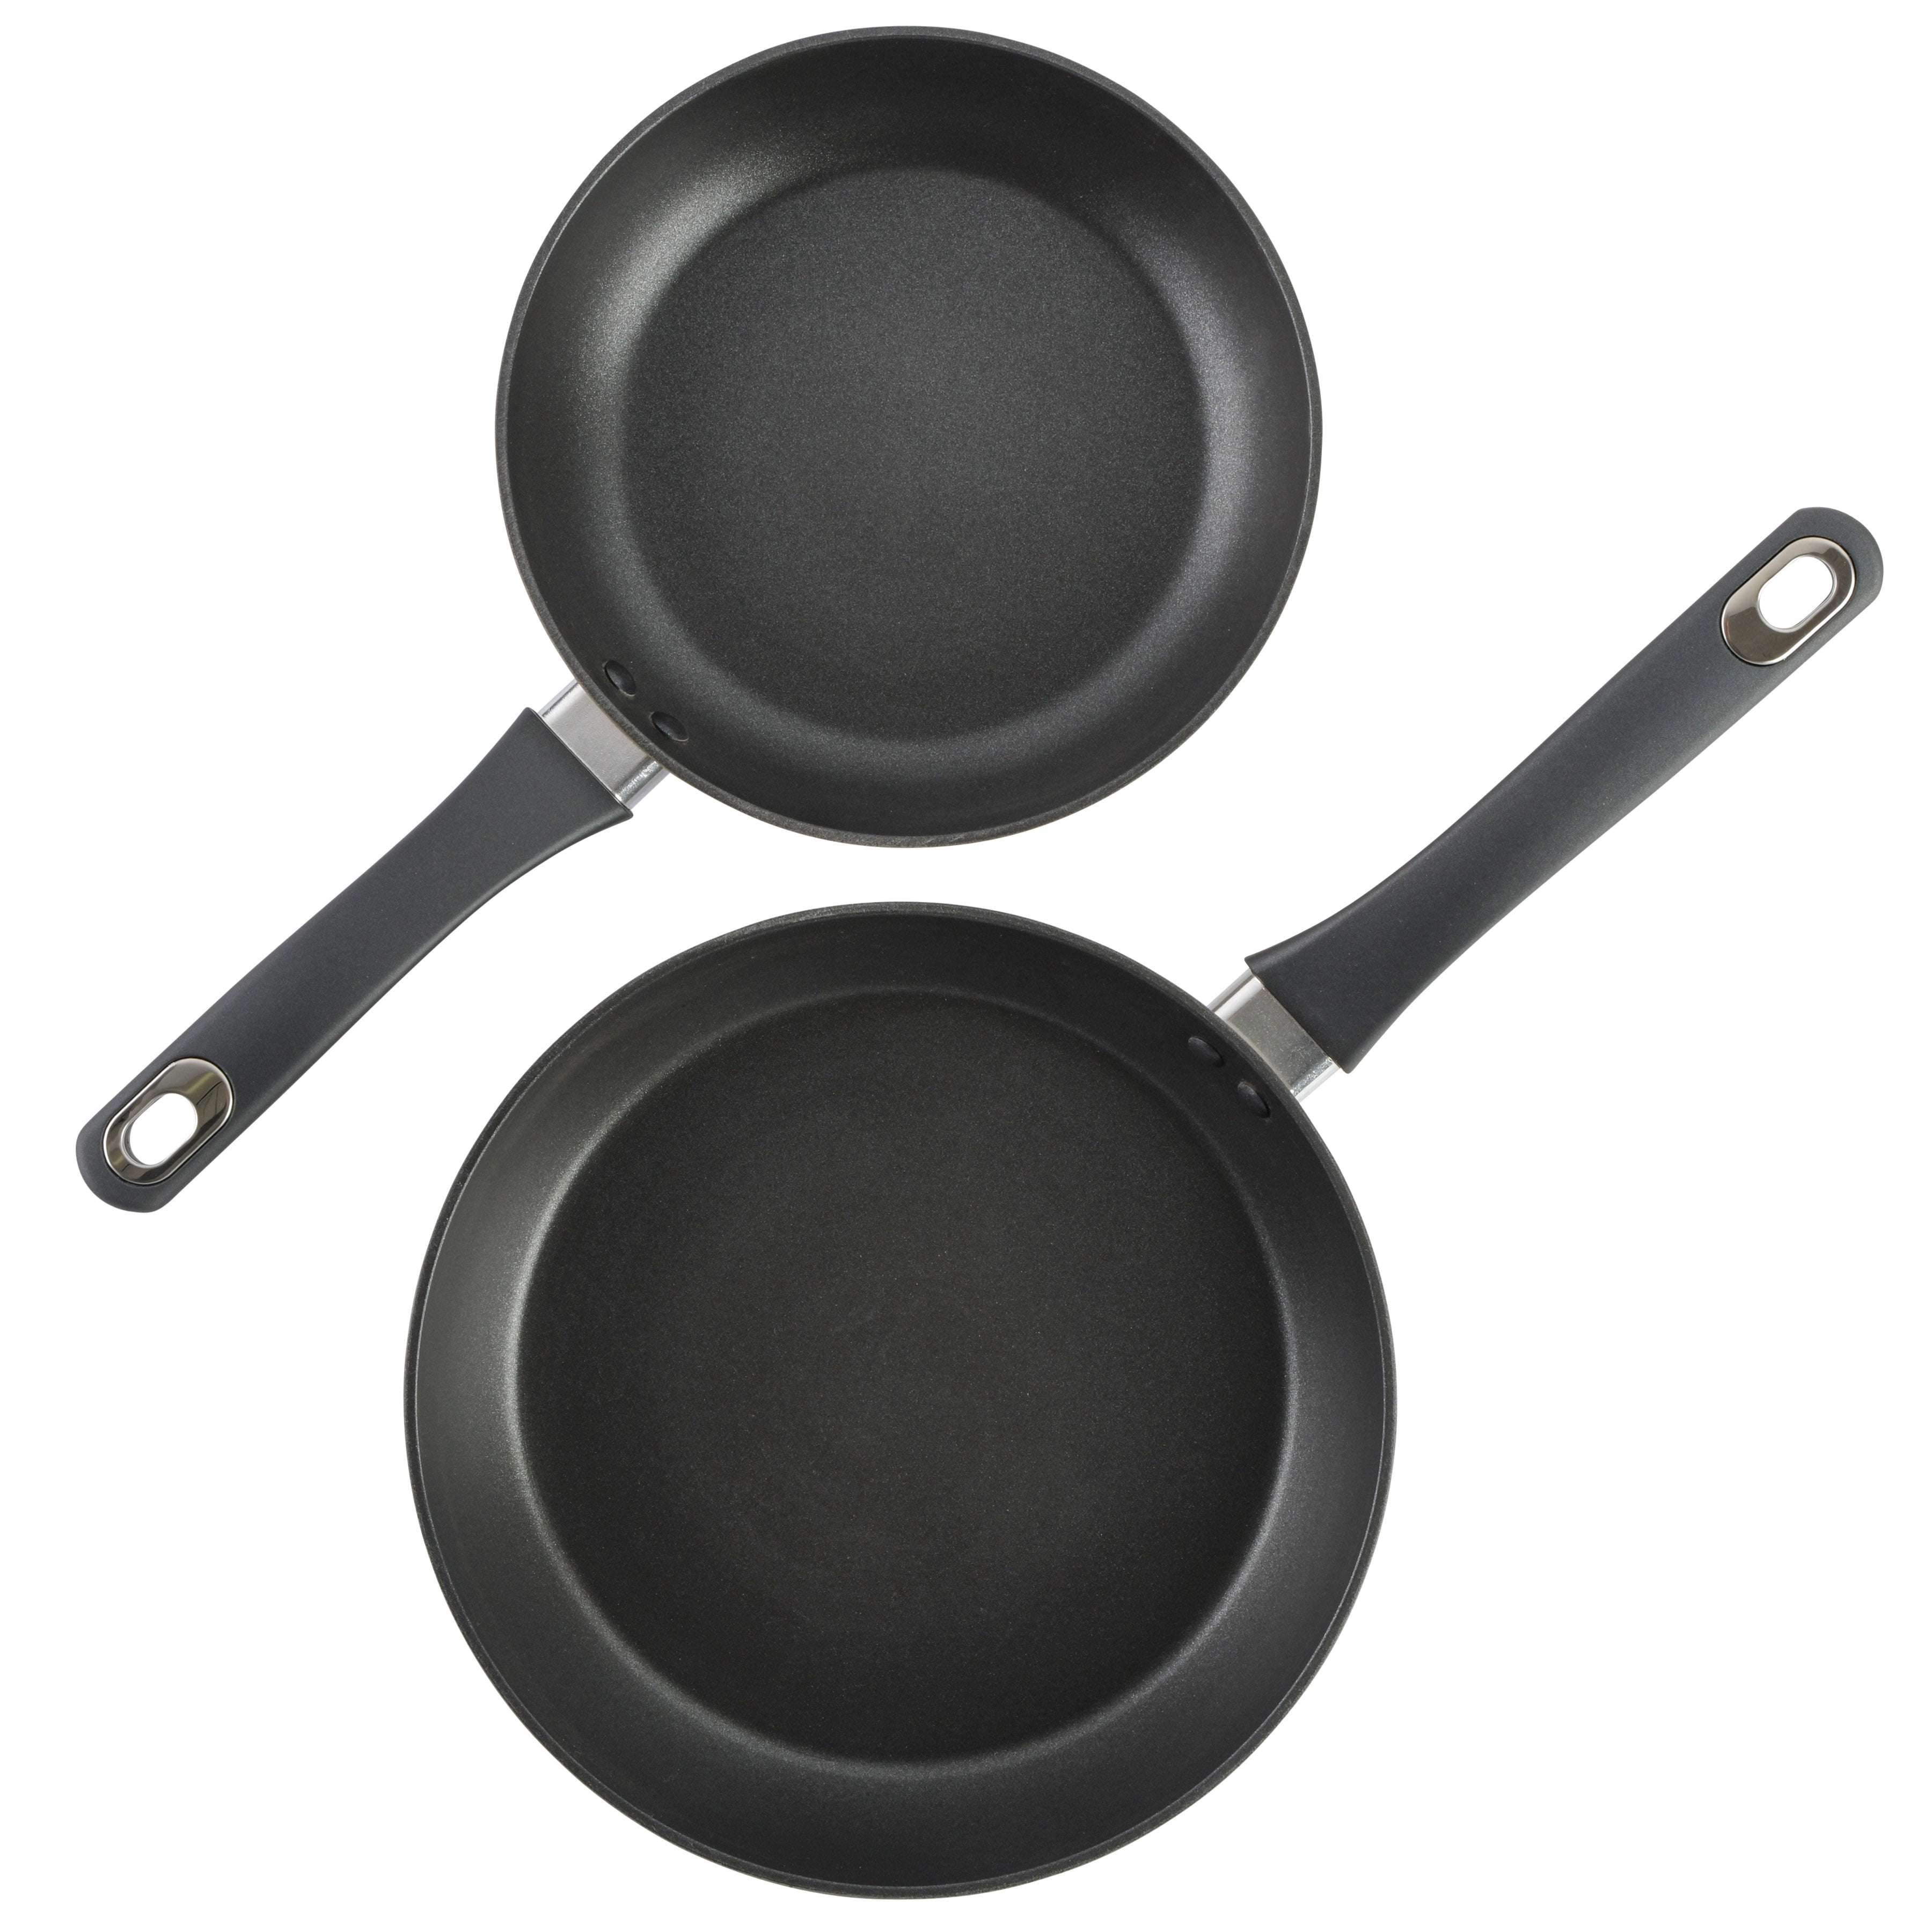 Martha Stewart Bosworth 10 Piece Hard Anodized Nonstick Aluminum Cookware Set - Black